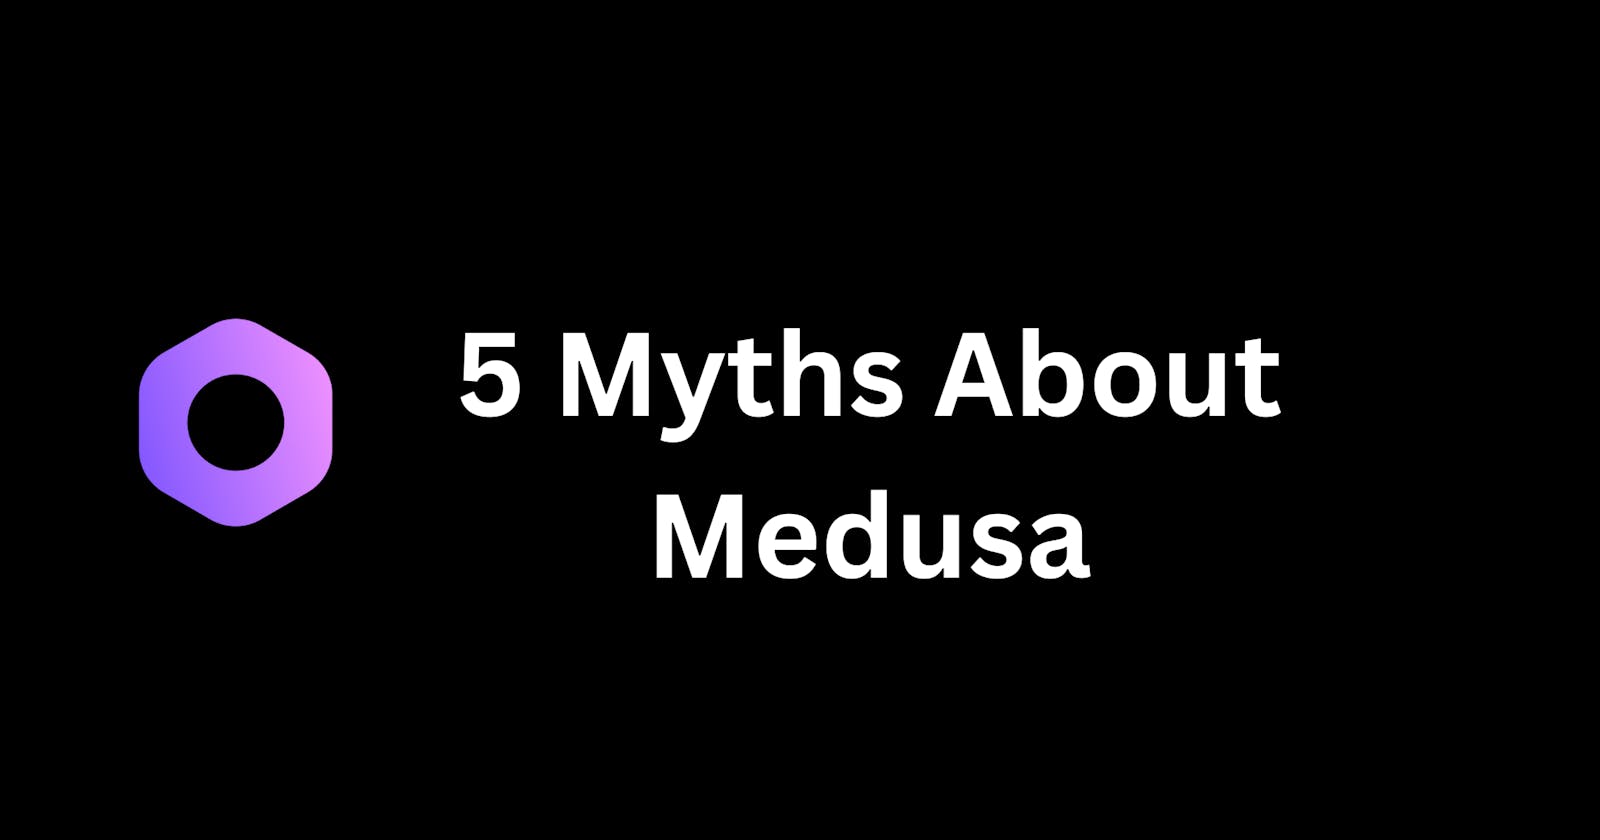 5 Myths About Medusa